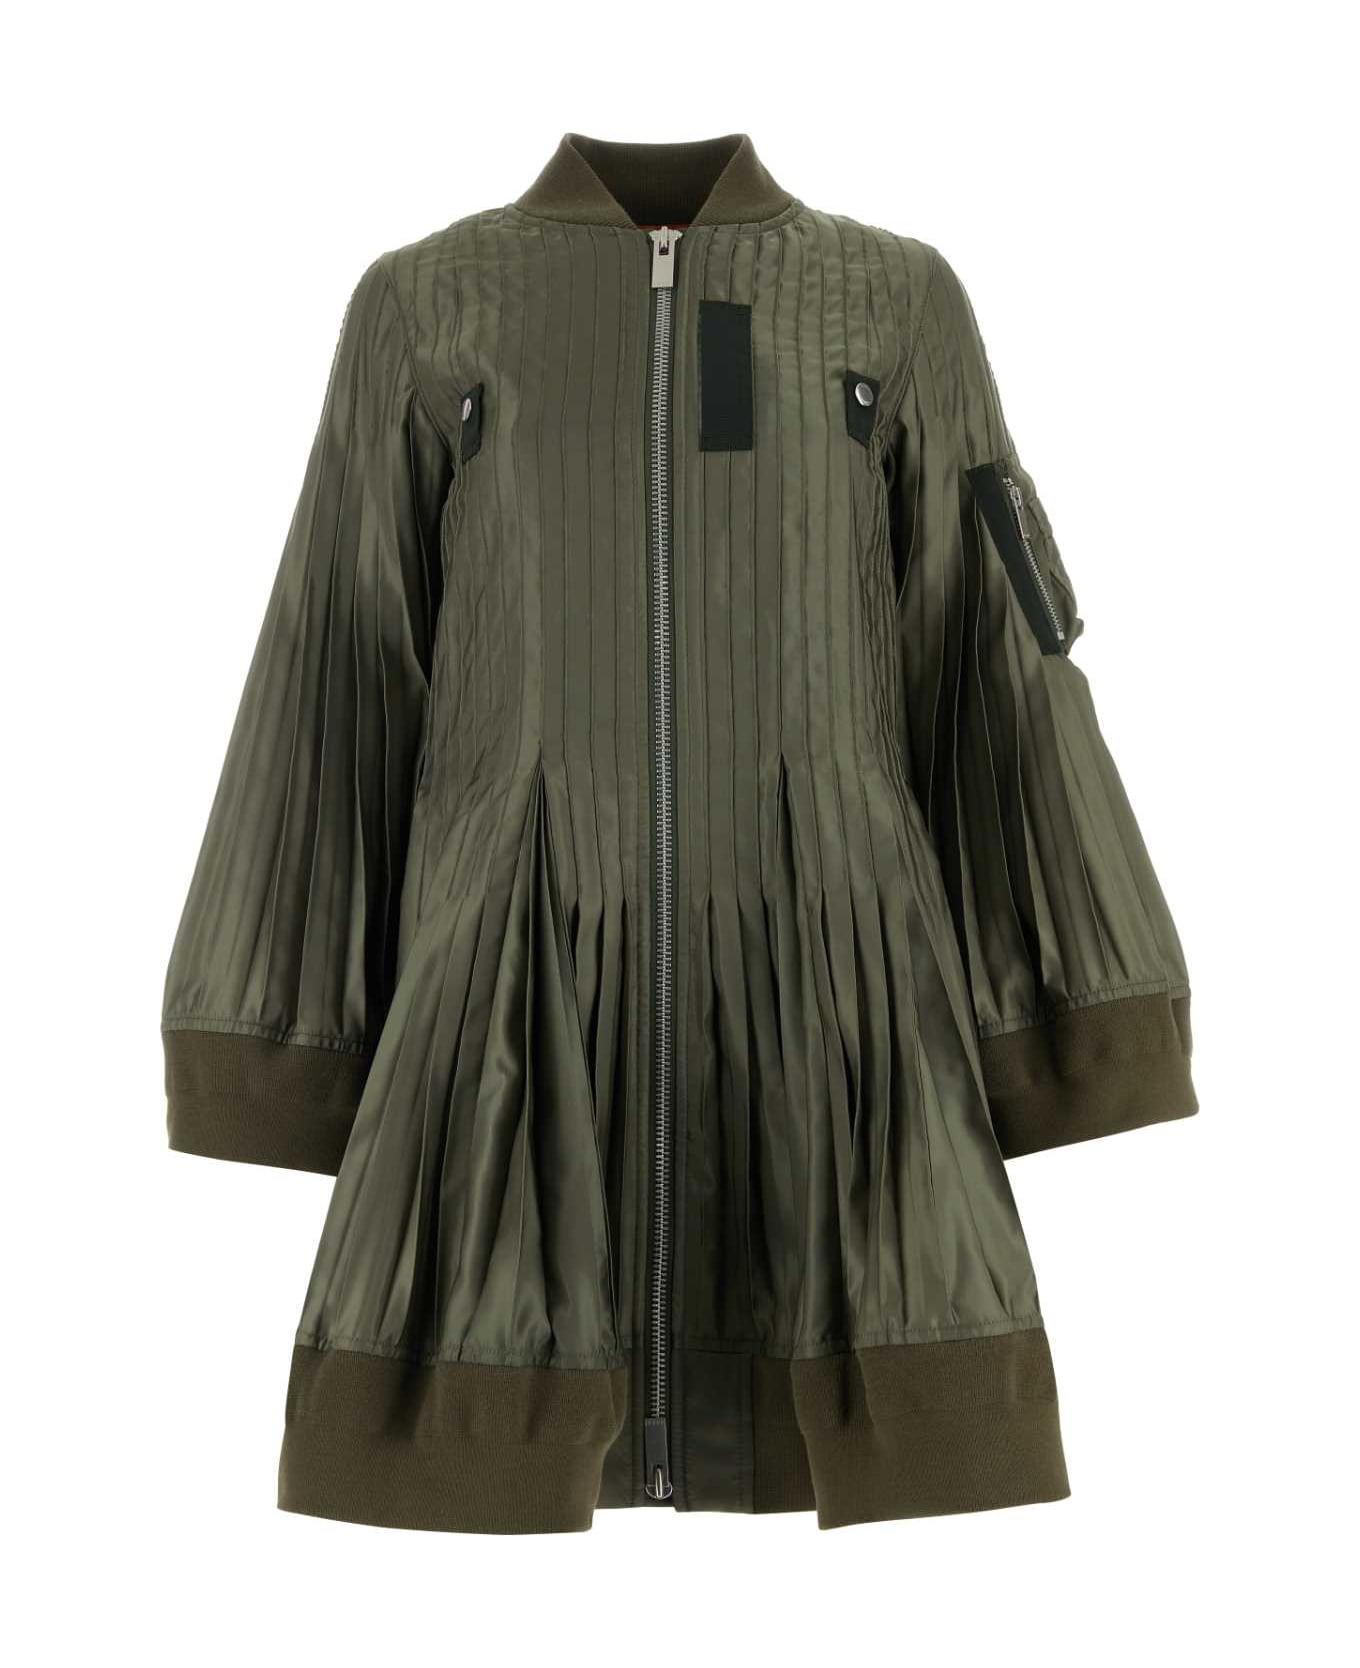 Sacai Army Green Polyester Jacket Dress - KHAKI